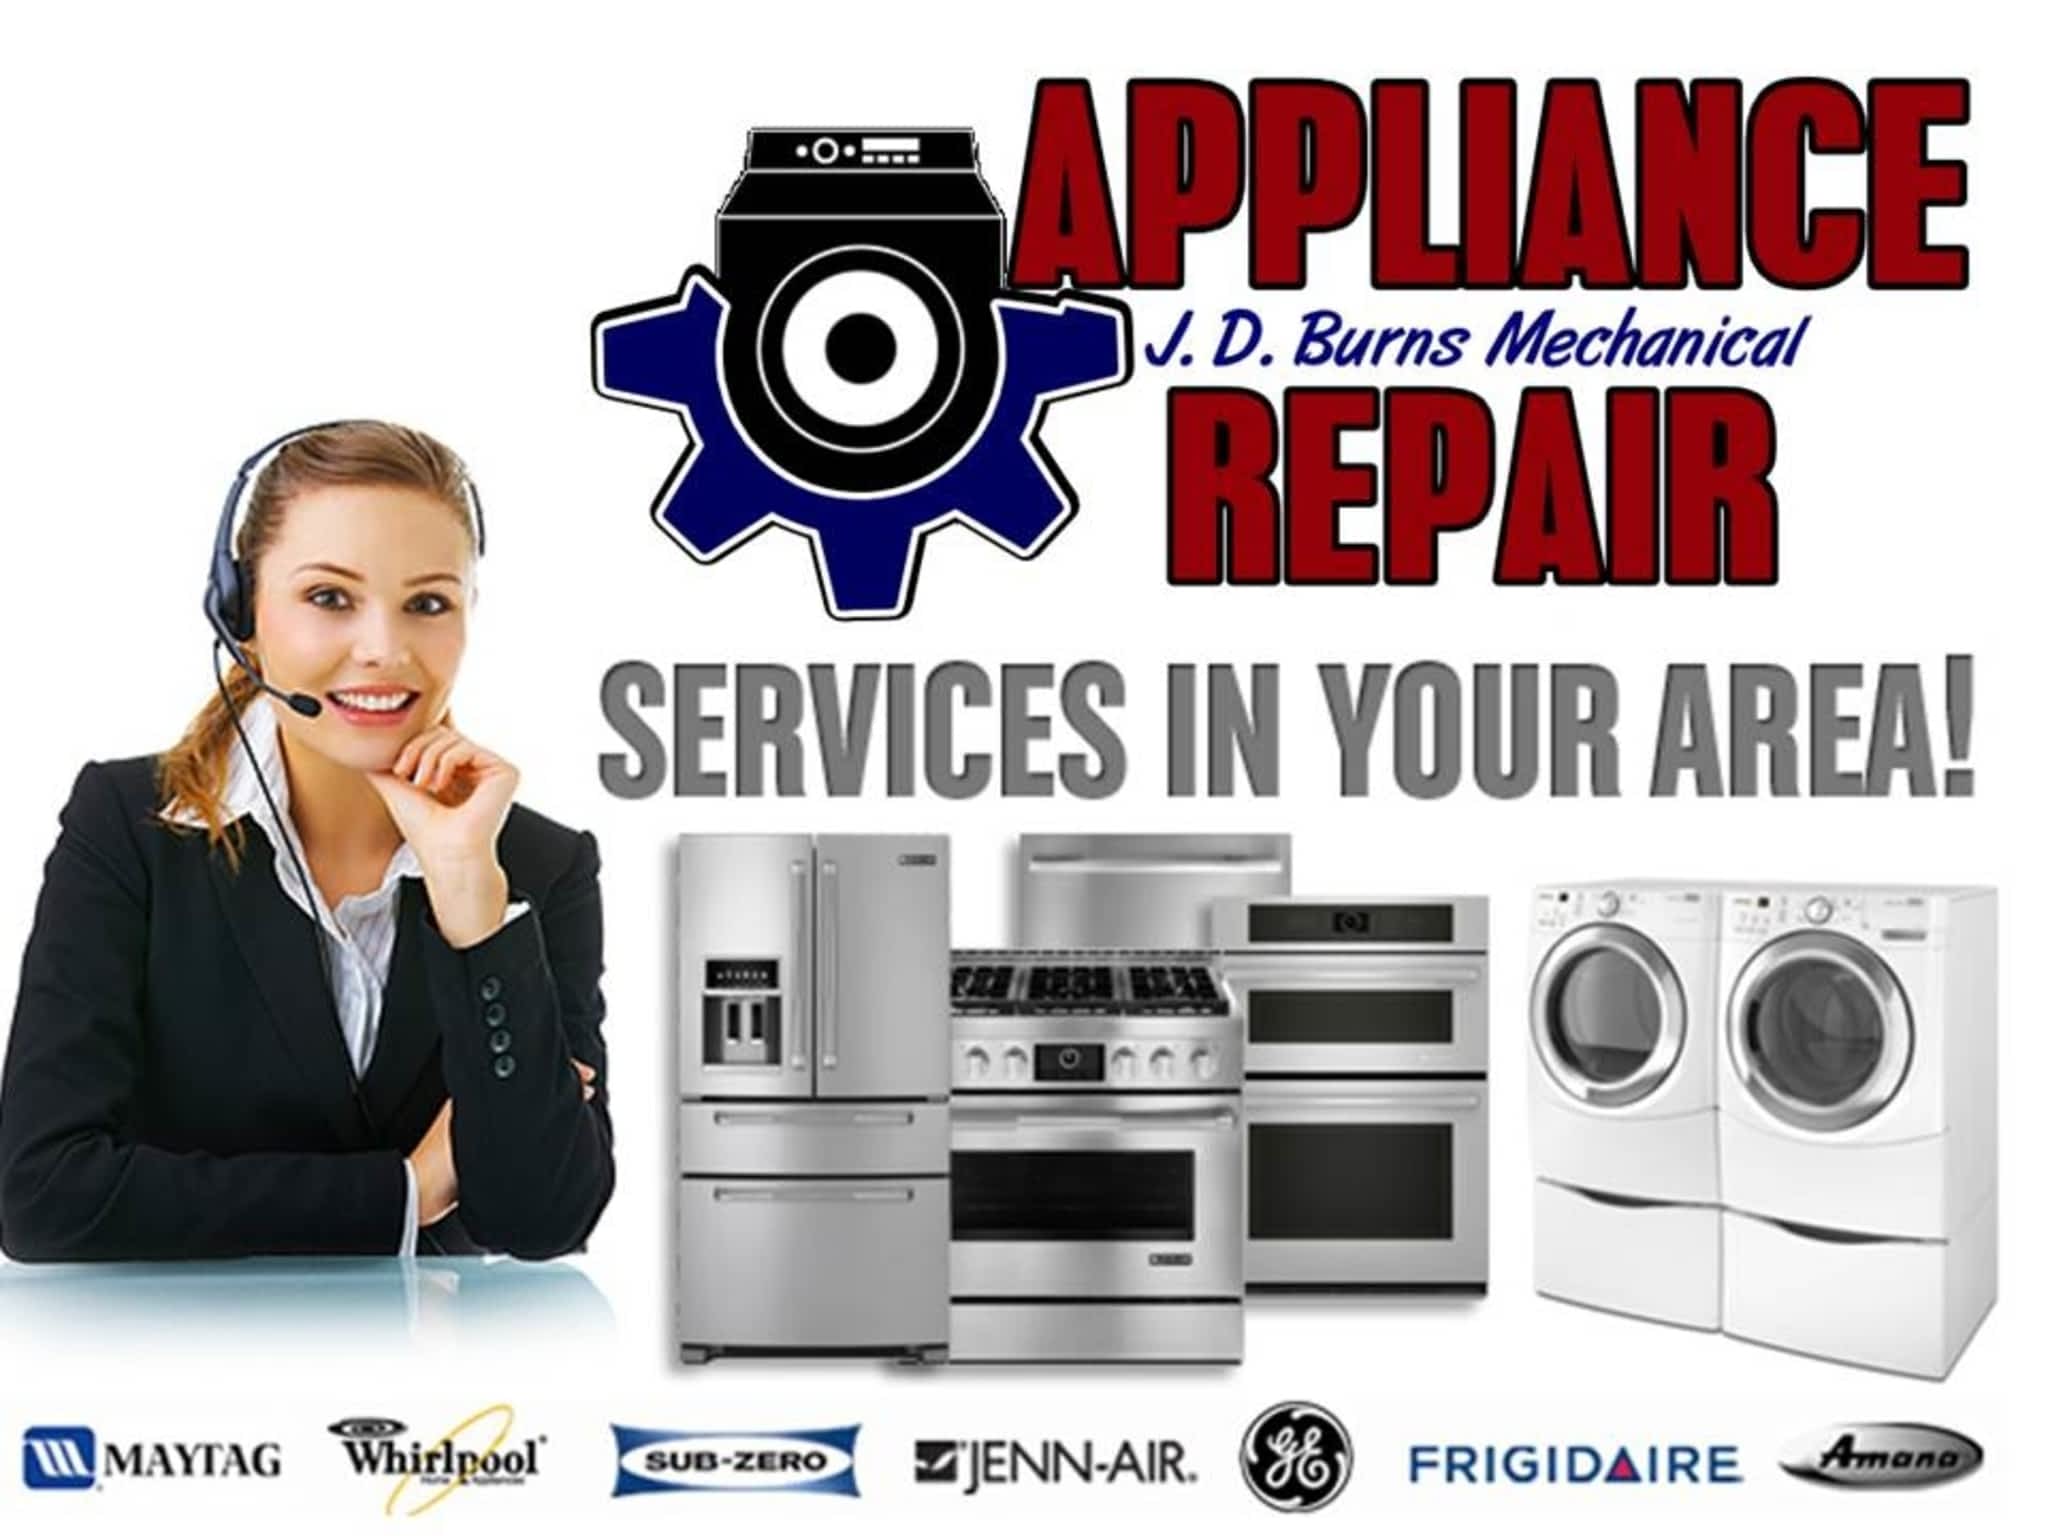 photo JD Burns Mechanical & Appliance Repair